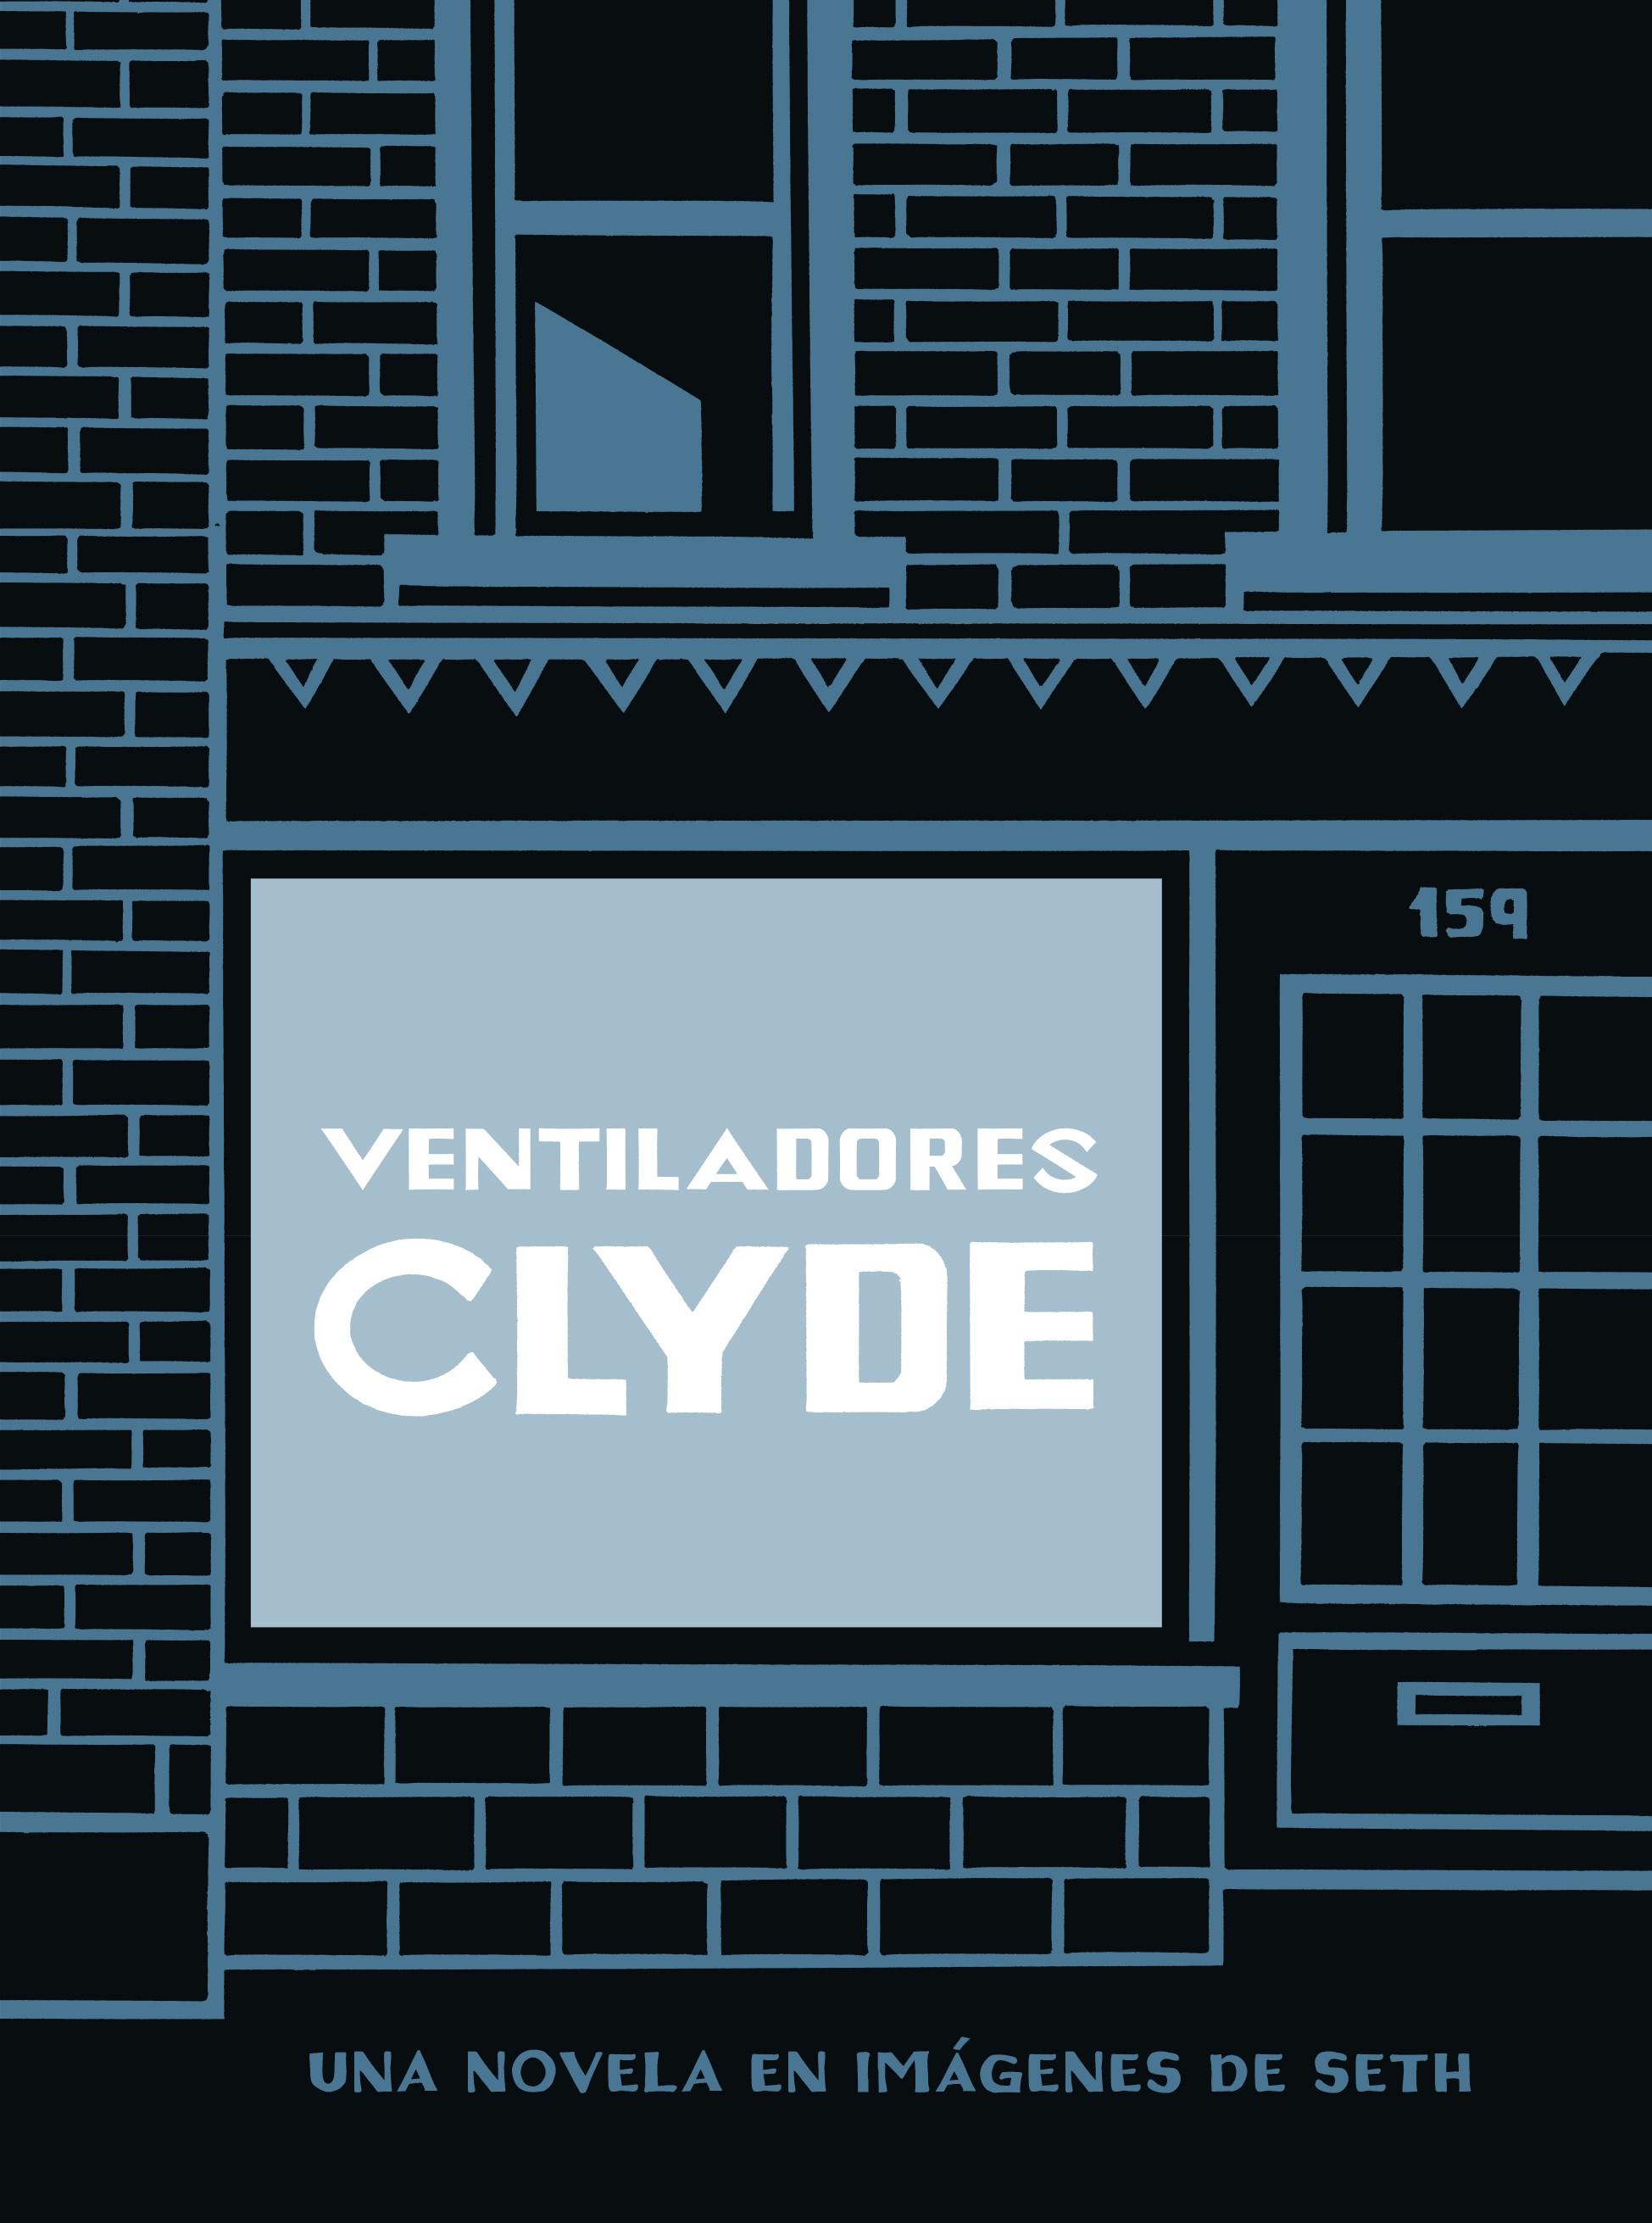 Ventiladores Clyde "Una novela en imágenes"